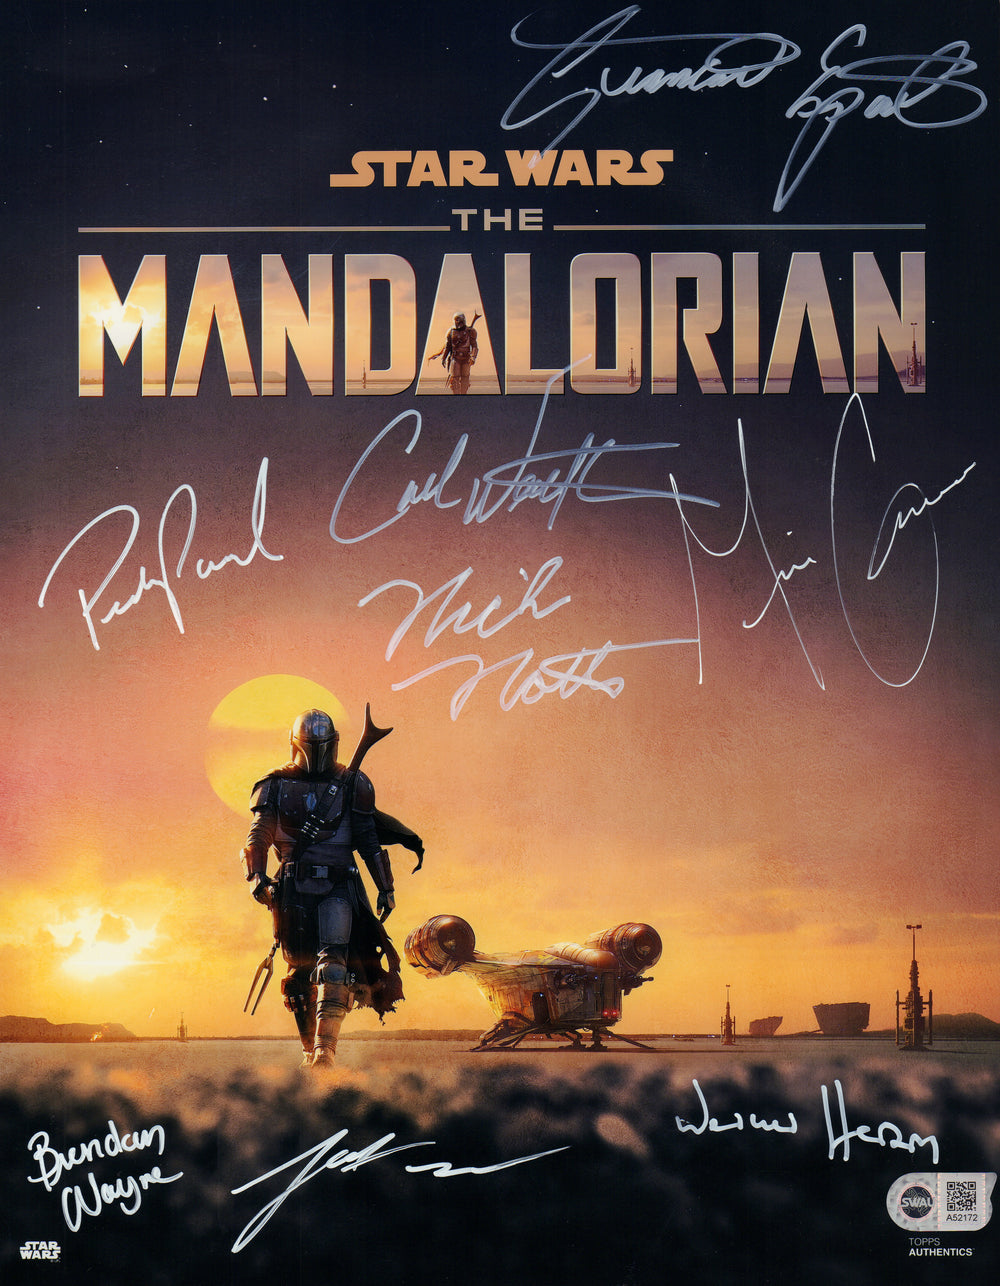 Star Wars: The Mandalorian 11x14 Photo (SWAU) Cast Signed by Pedro Pascal, Brendan Wayne, Lateef Crowder, Werner Herzog, Gina Carano, Giancarlo Esposito, Nick Nolte, & Carl Weathers